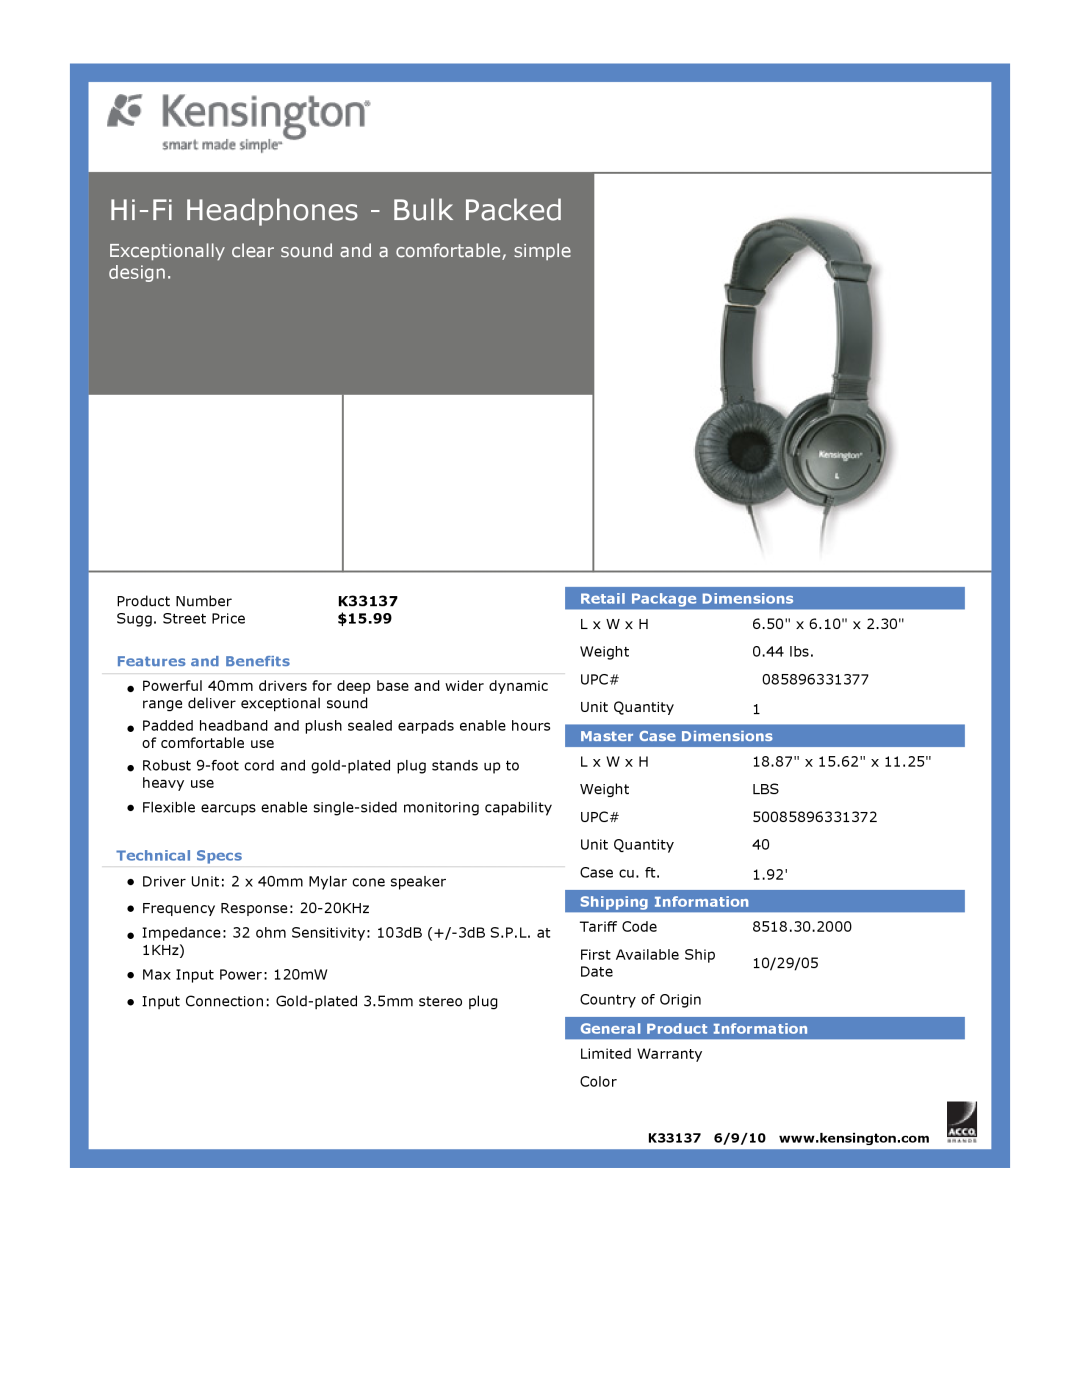 Kensington EU64325 Hi-FiHeadphones - Bulk Packed, $15.99, Features and Benefits, Technical Specs, Master Case Dimensions 